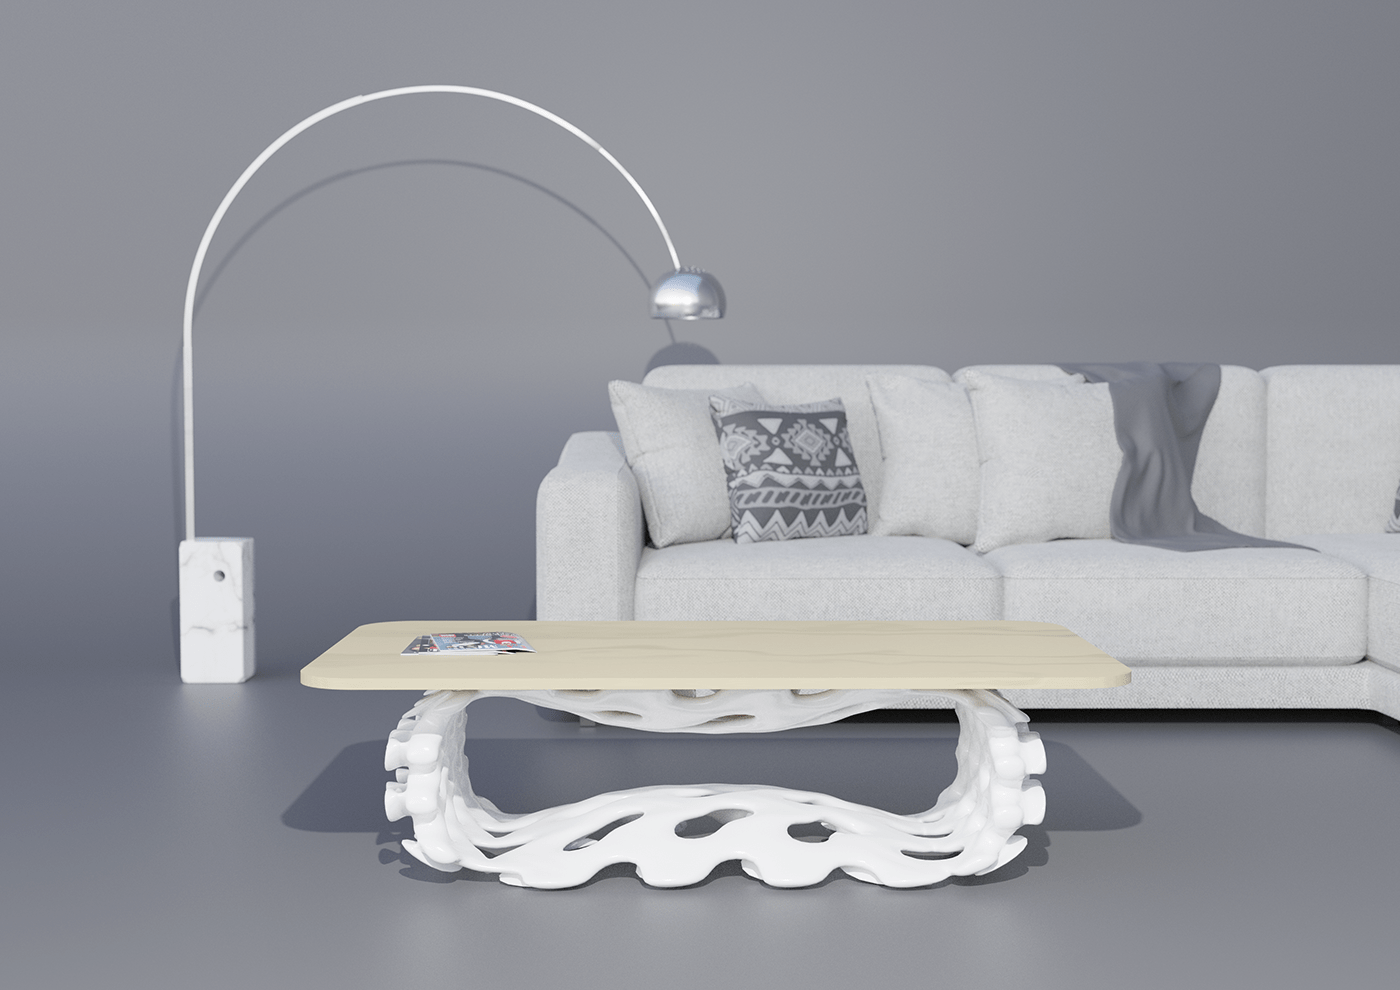 blender coffee table industrial design  product design  Student work University